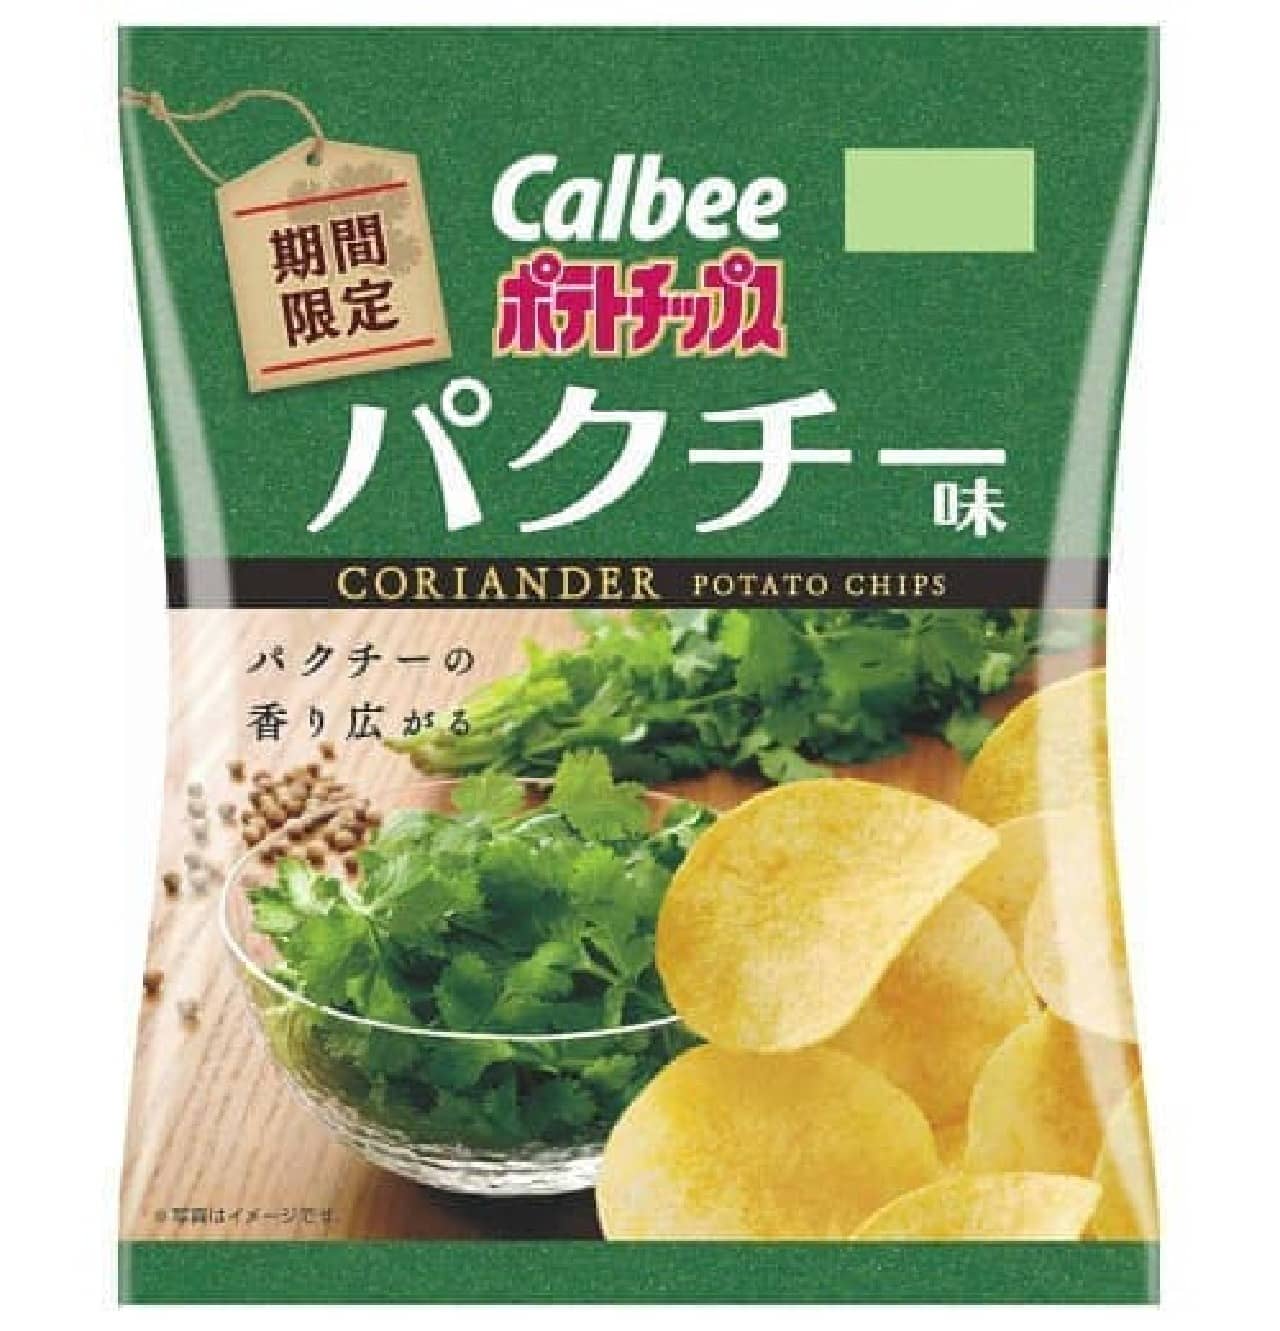 Potato chips coriander flavor